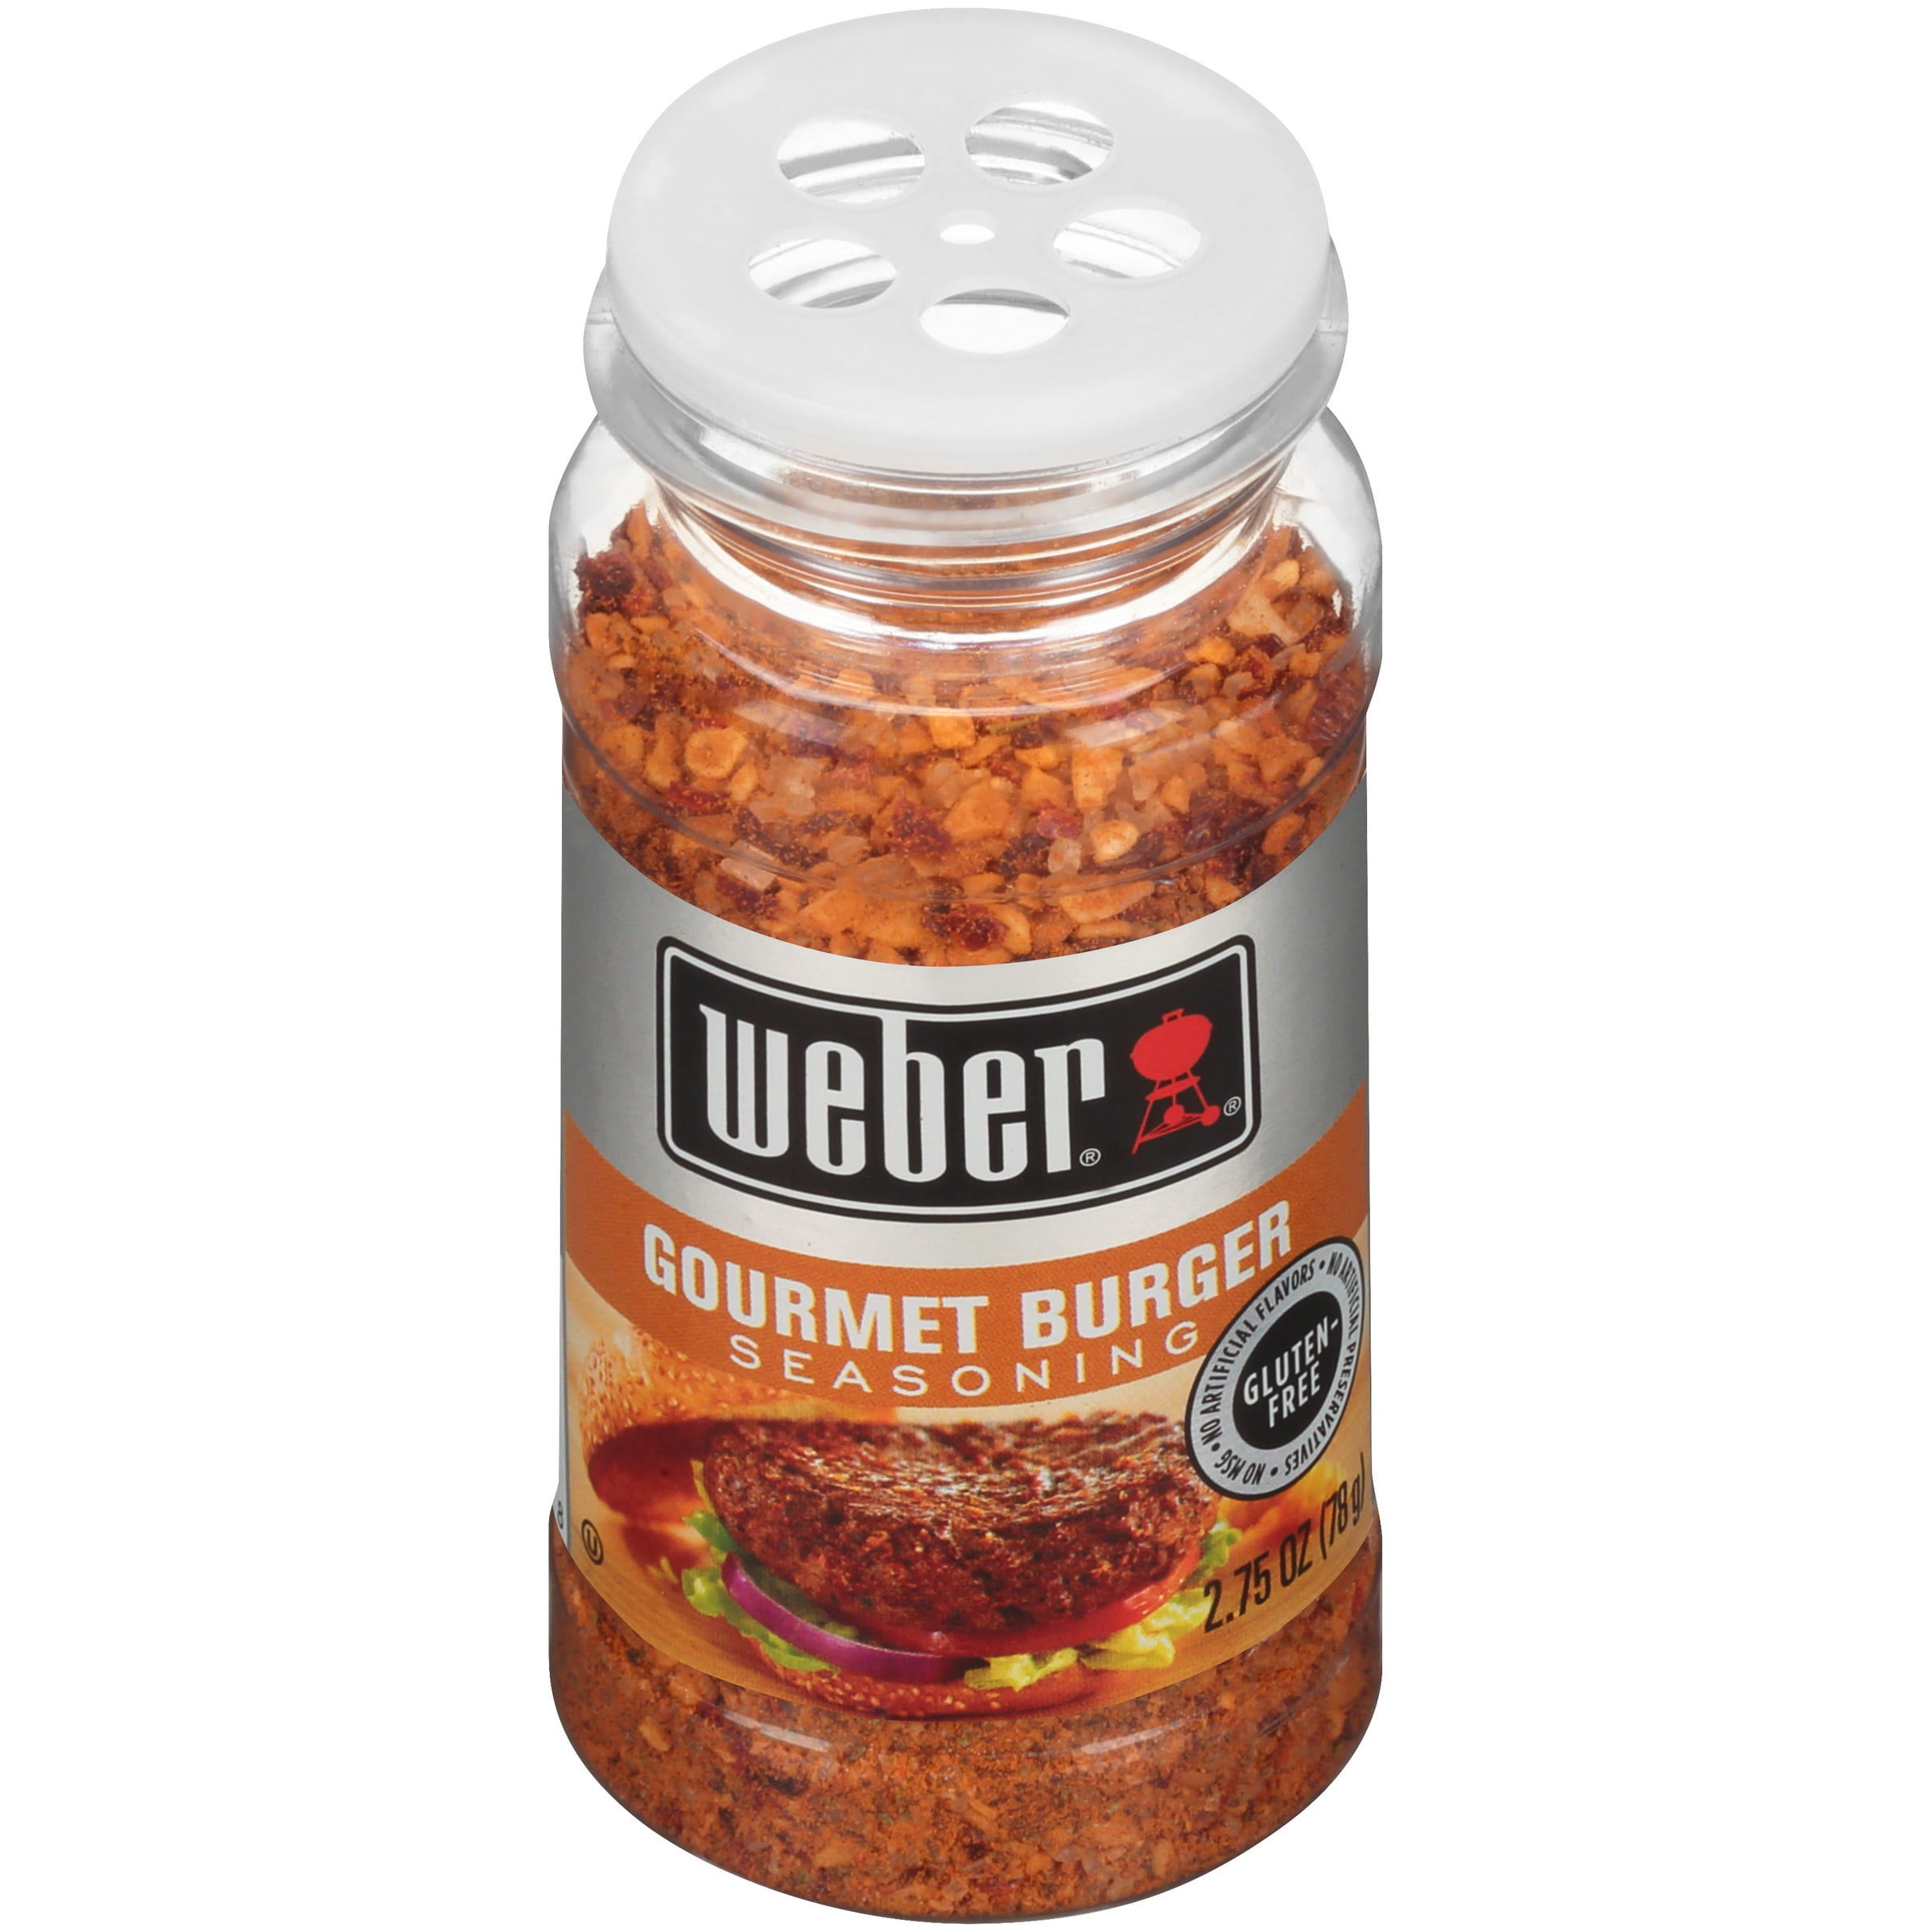 Weber Gourmet Burger Seasoning 2.75 oz 